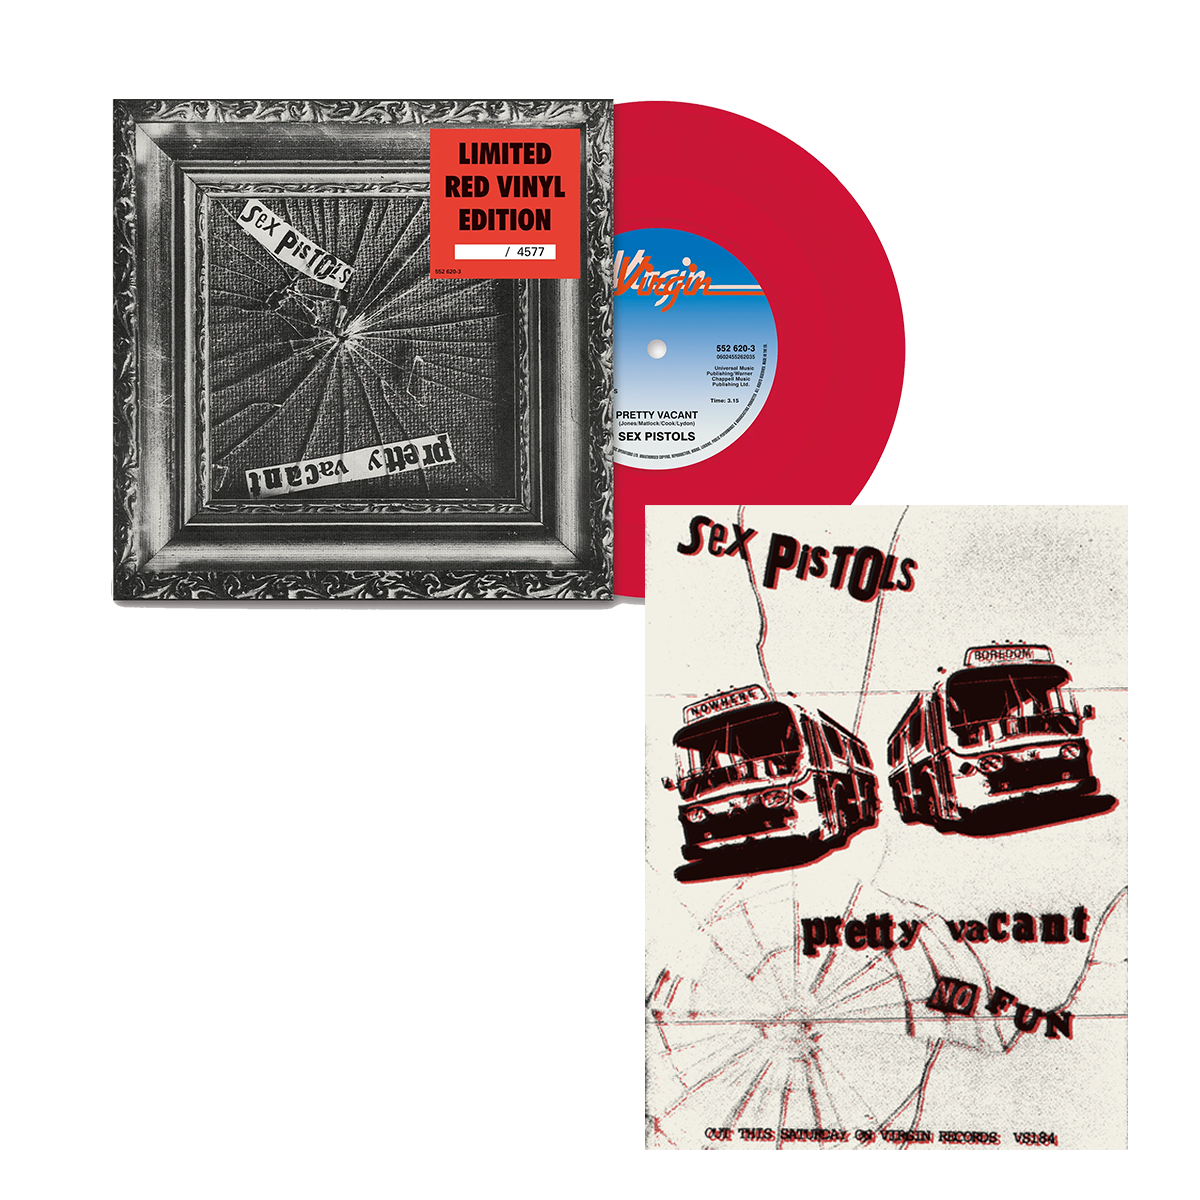 Pretty Vacant: Red Vinyl 7" Single + Pretty Vacant Poster